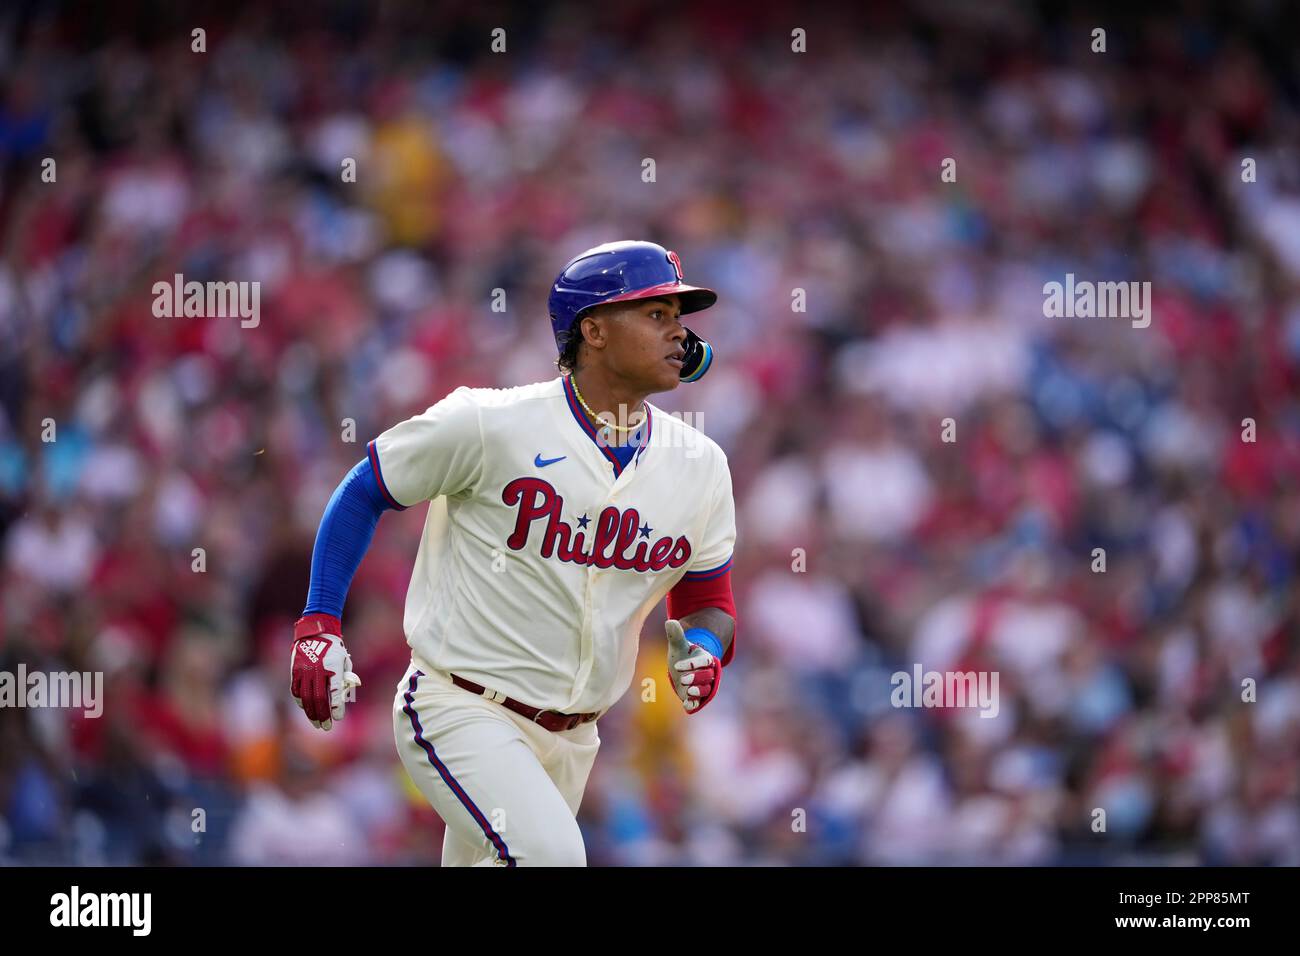 Philadelphia Phillies' Cristian Pache plays during a baseball game